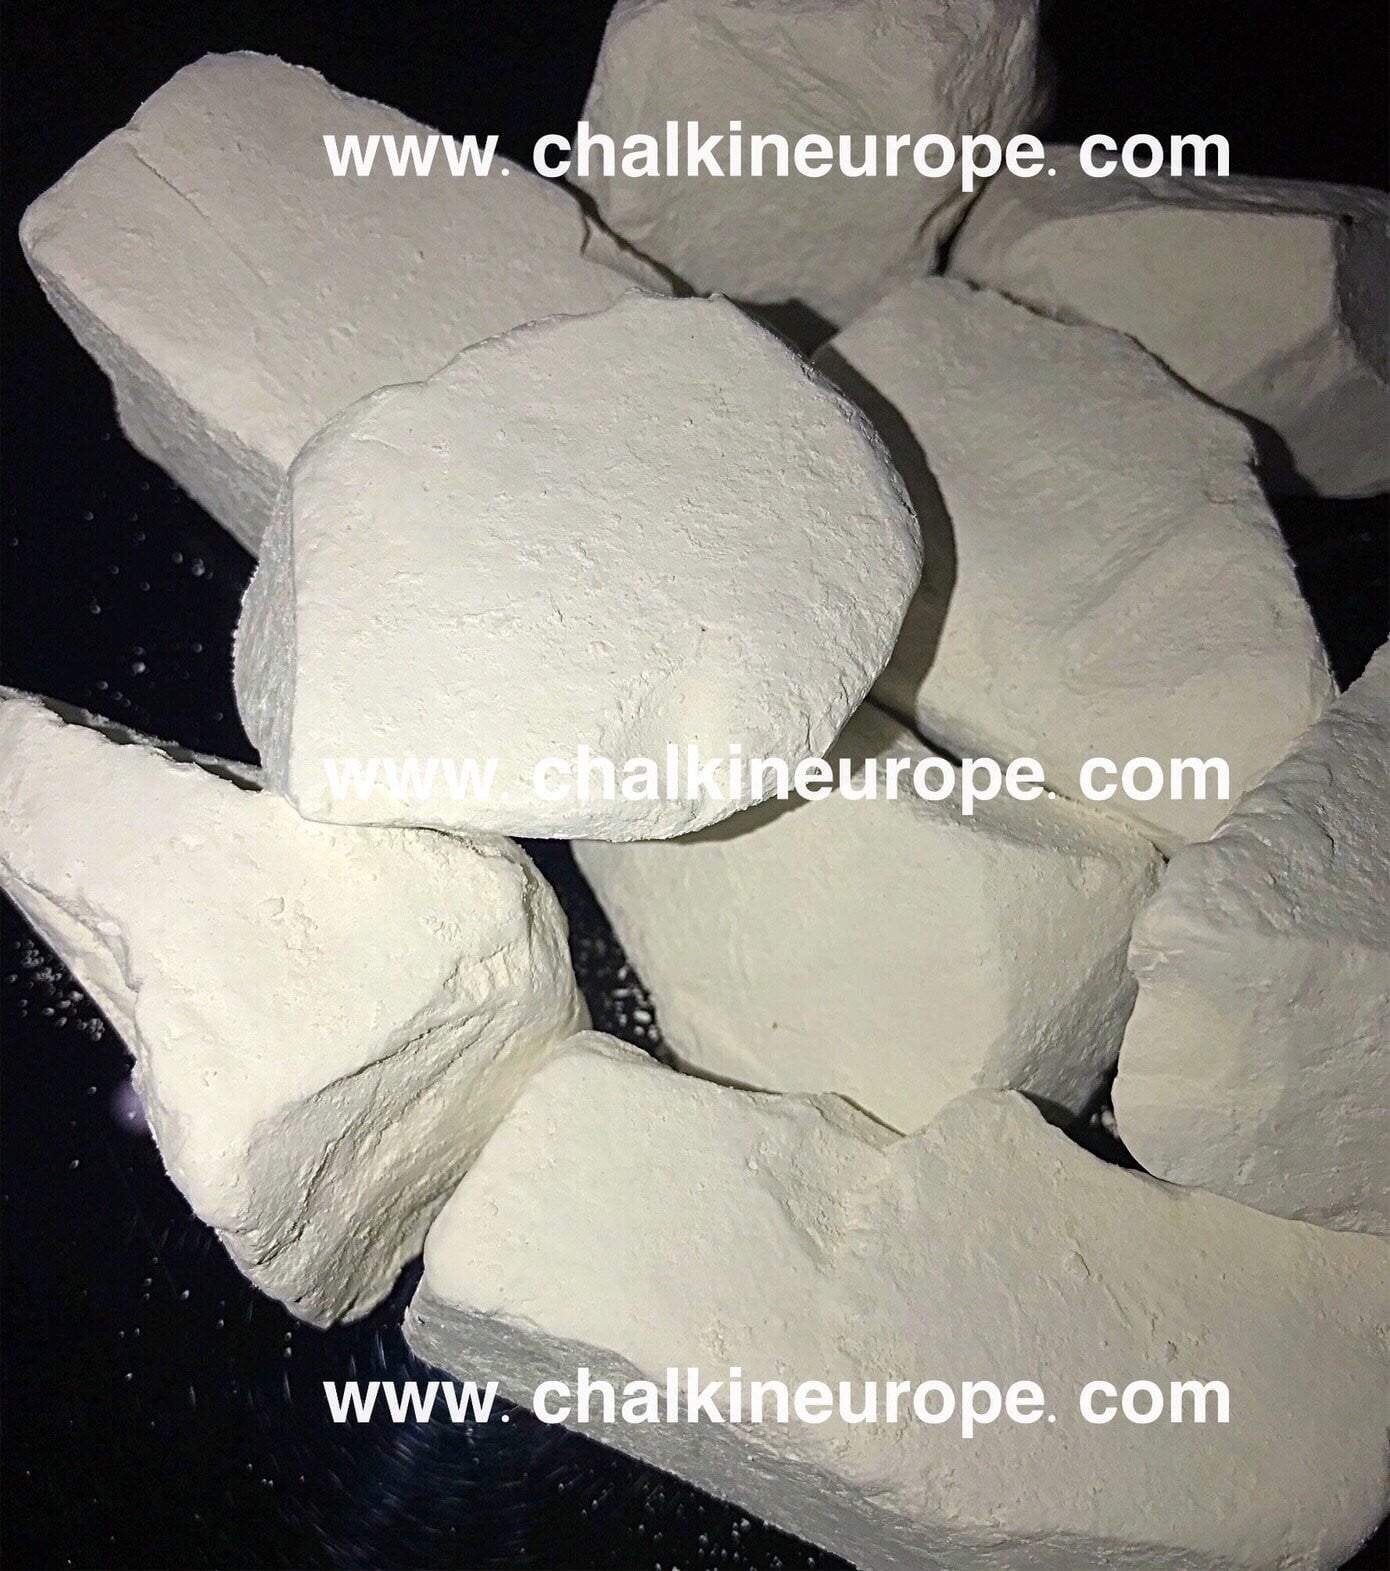 Edible chalk, SVYAT edible Chalk chunks (lump) natural for eating